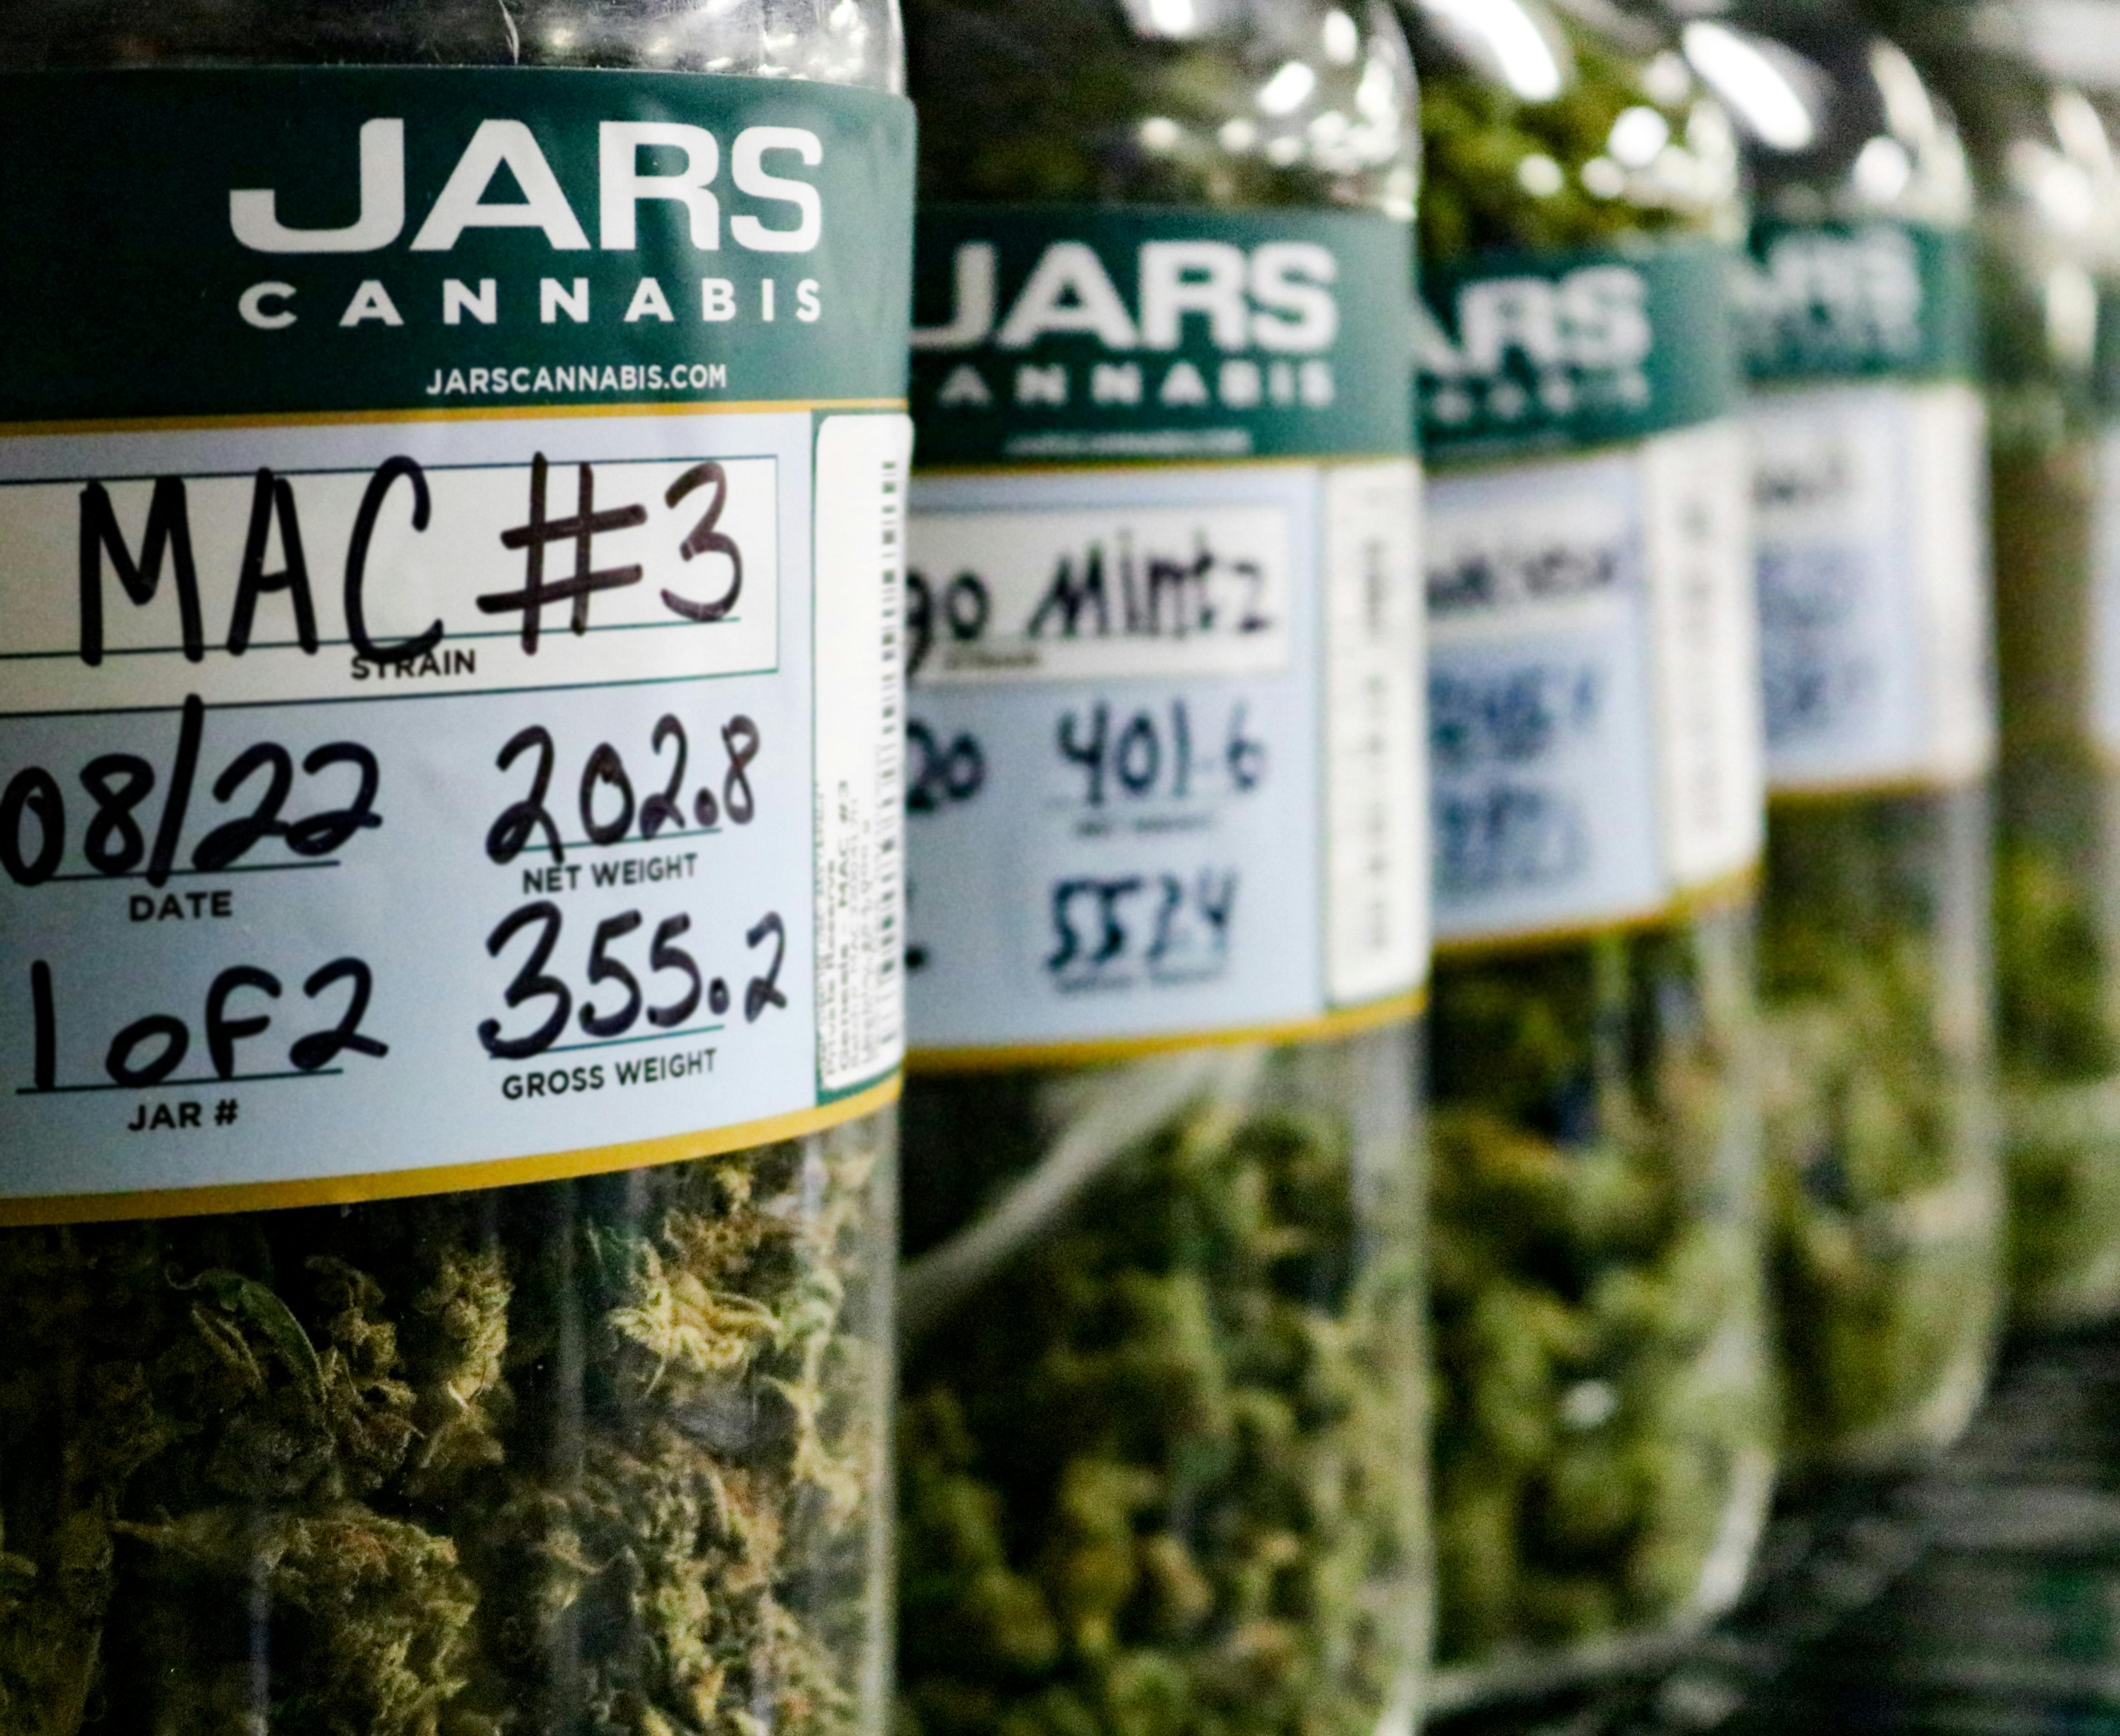 JARS Cannabis - Metro Center (Med/Rec) | Phoenix, AZ Dispensary | Leafly